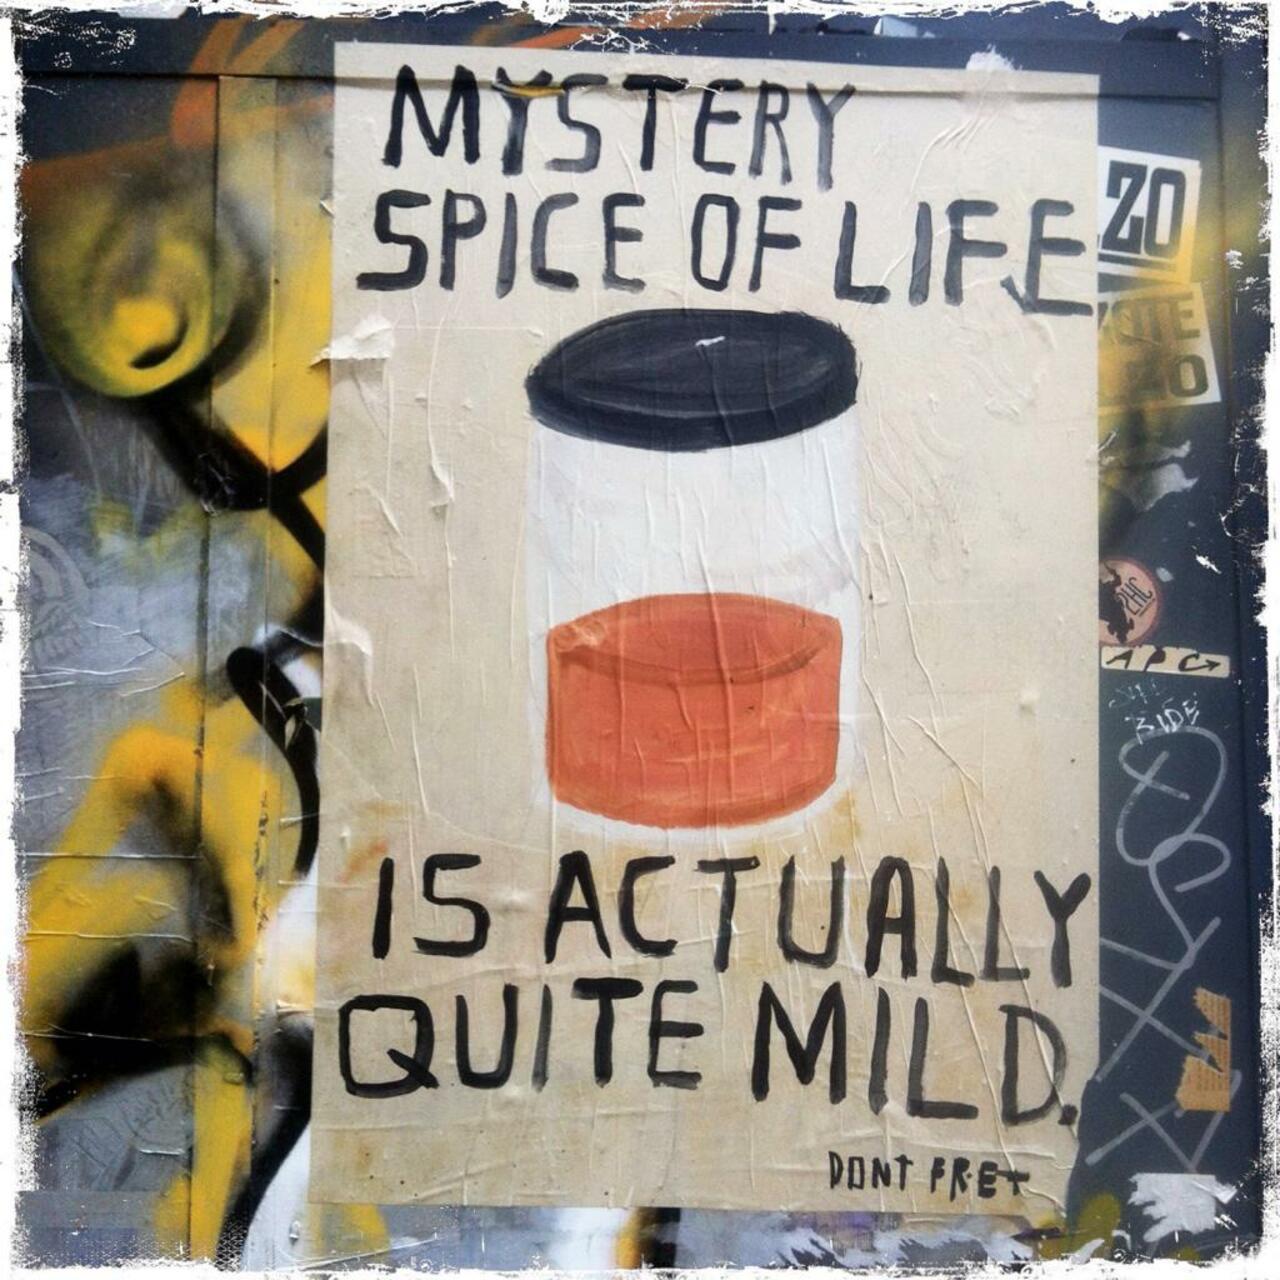 RT @BrickLaneArt: Mystery spice of life.... Paste-up by Don't Fret 

#streetart #art #graffiti http://t.co/jSDn9HXP1c